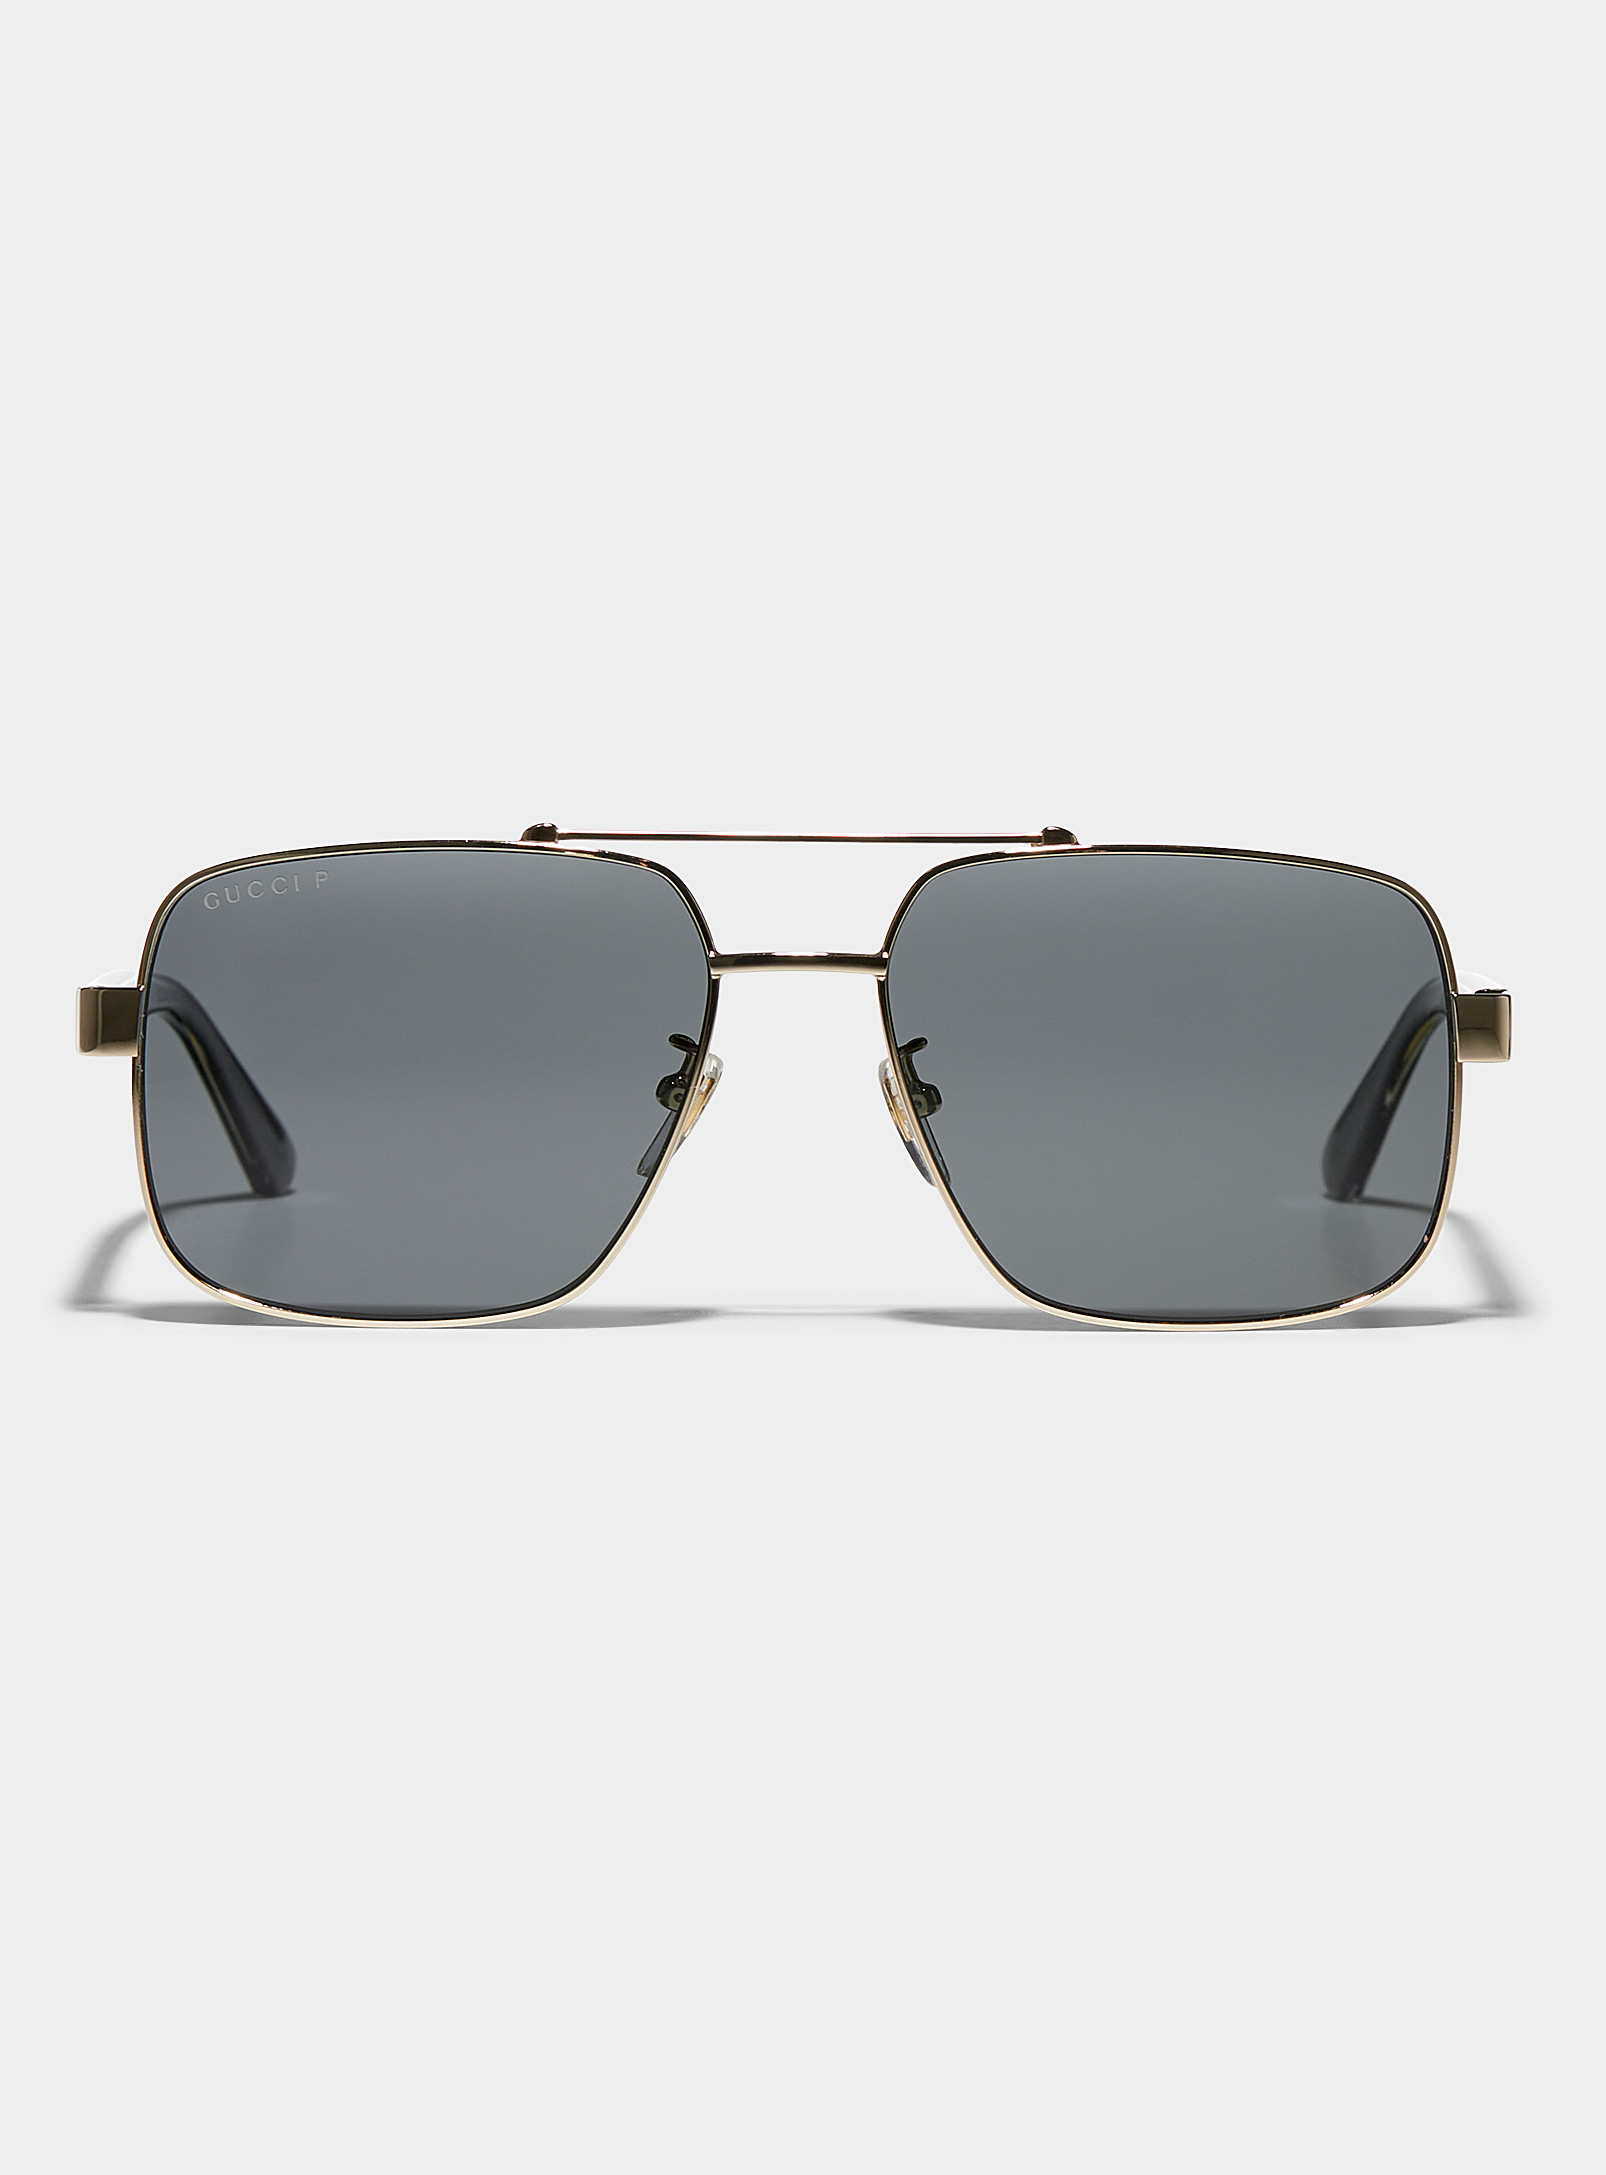 Gucci - Signature stripe aviator sunglasses